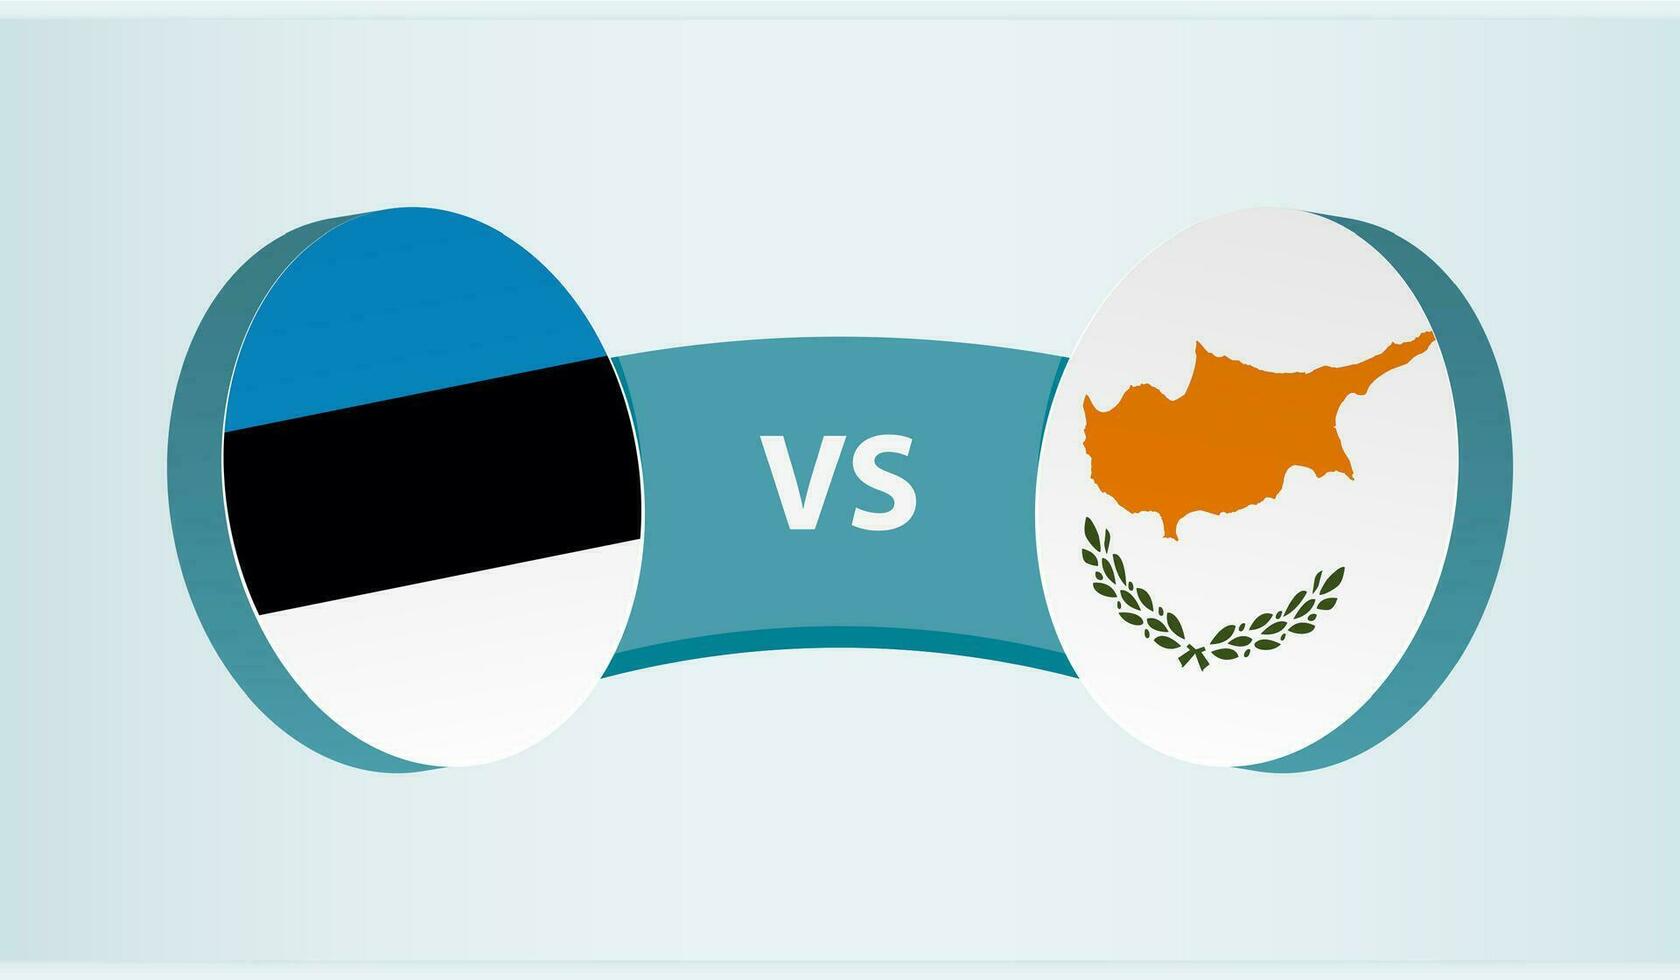 Estonia versus Cyprus, team sports competition concept. vector